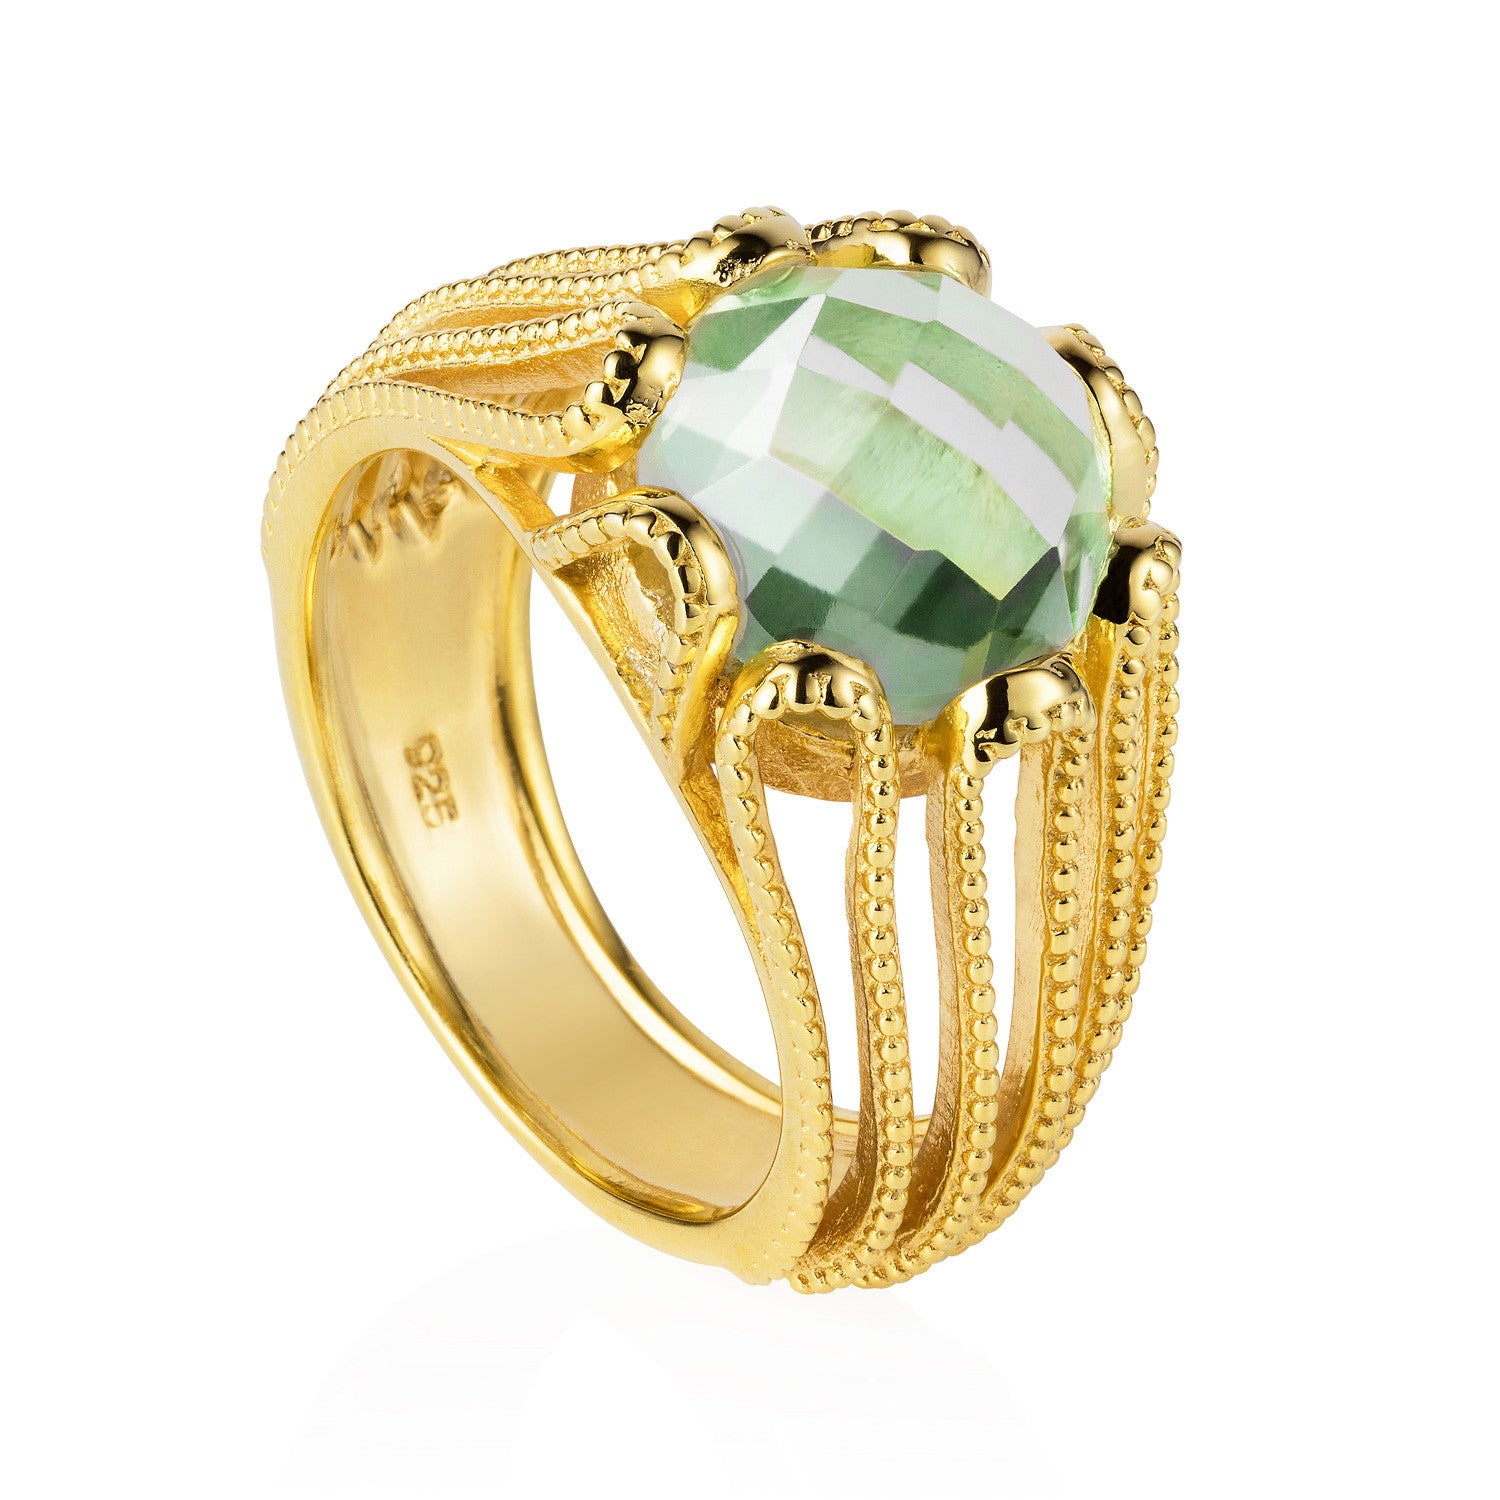 gold, vermeil, cocktail ring, green amethyst gemstone, geometric, unique British design 